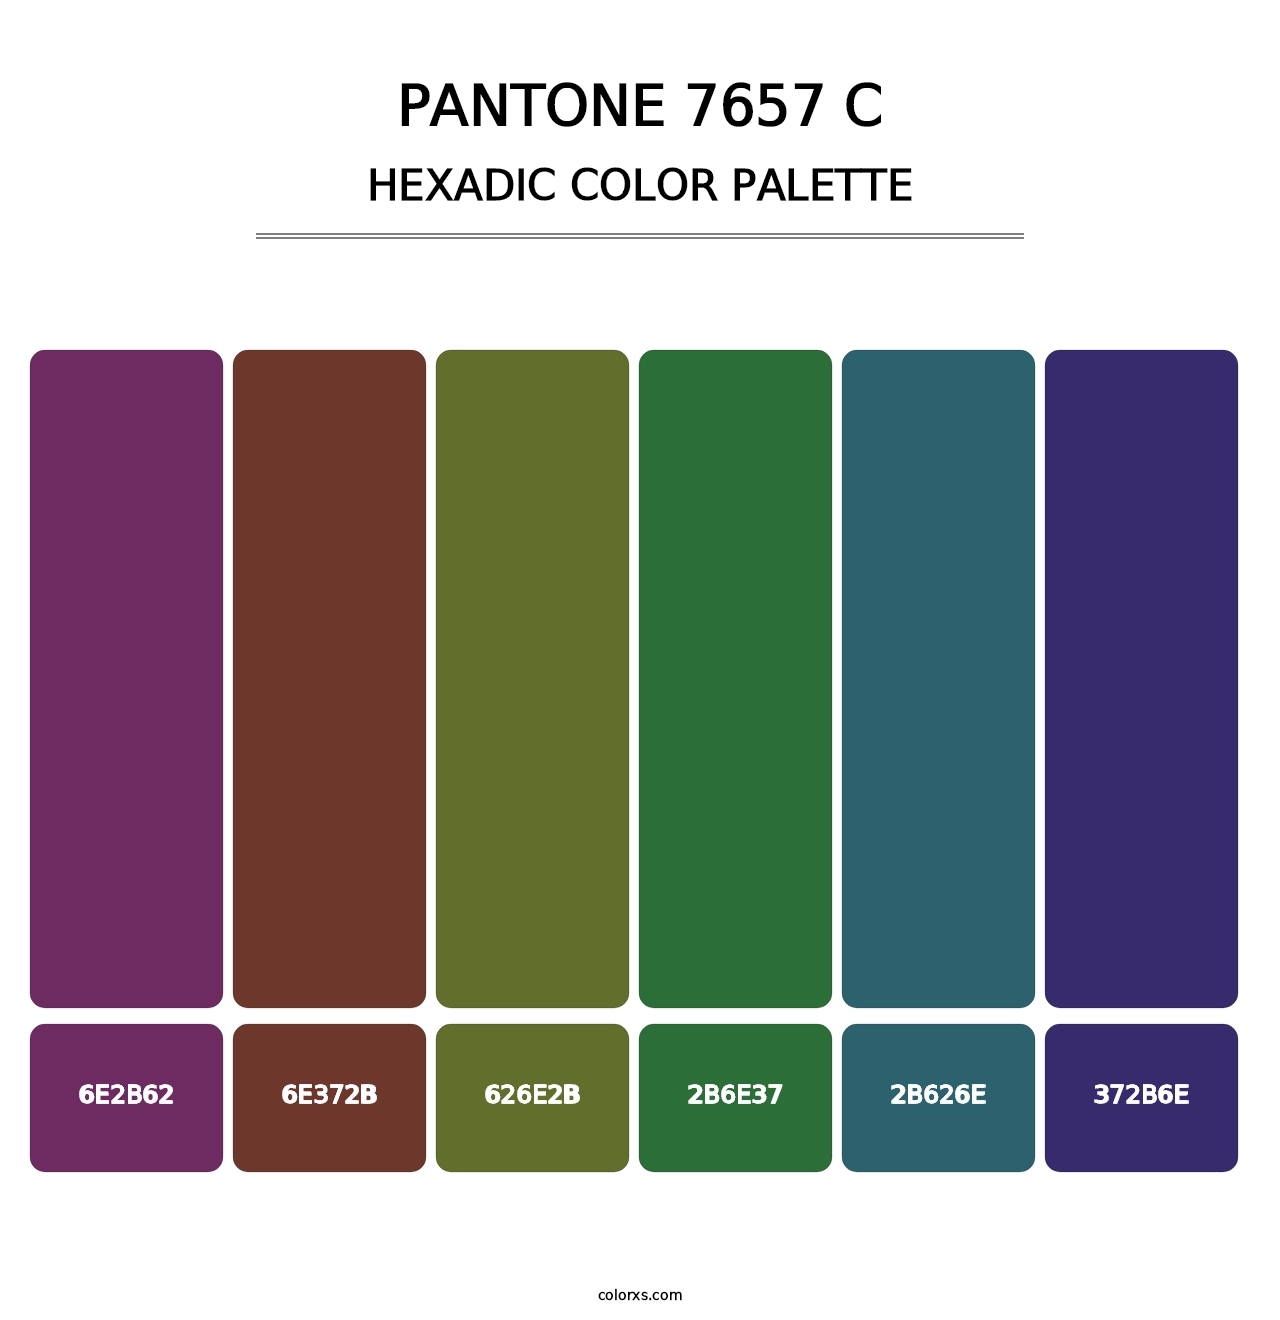 PANTONE 7657 C - Hexadic Color Palette